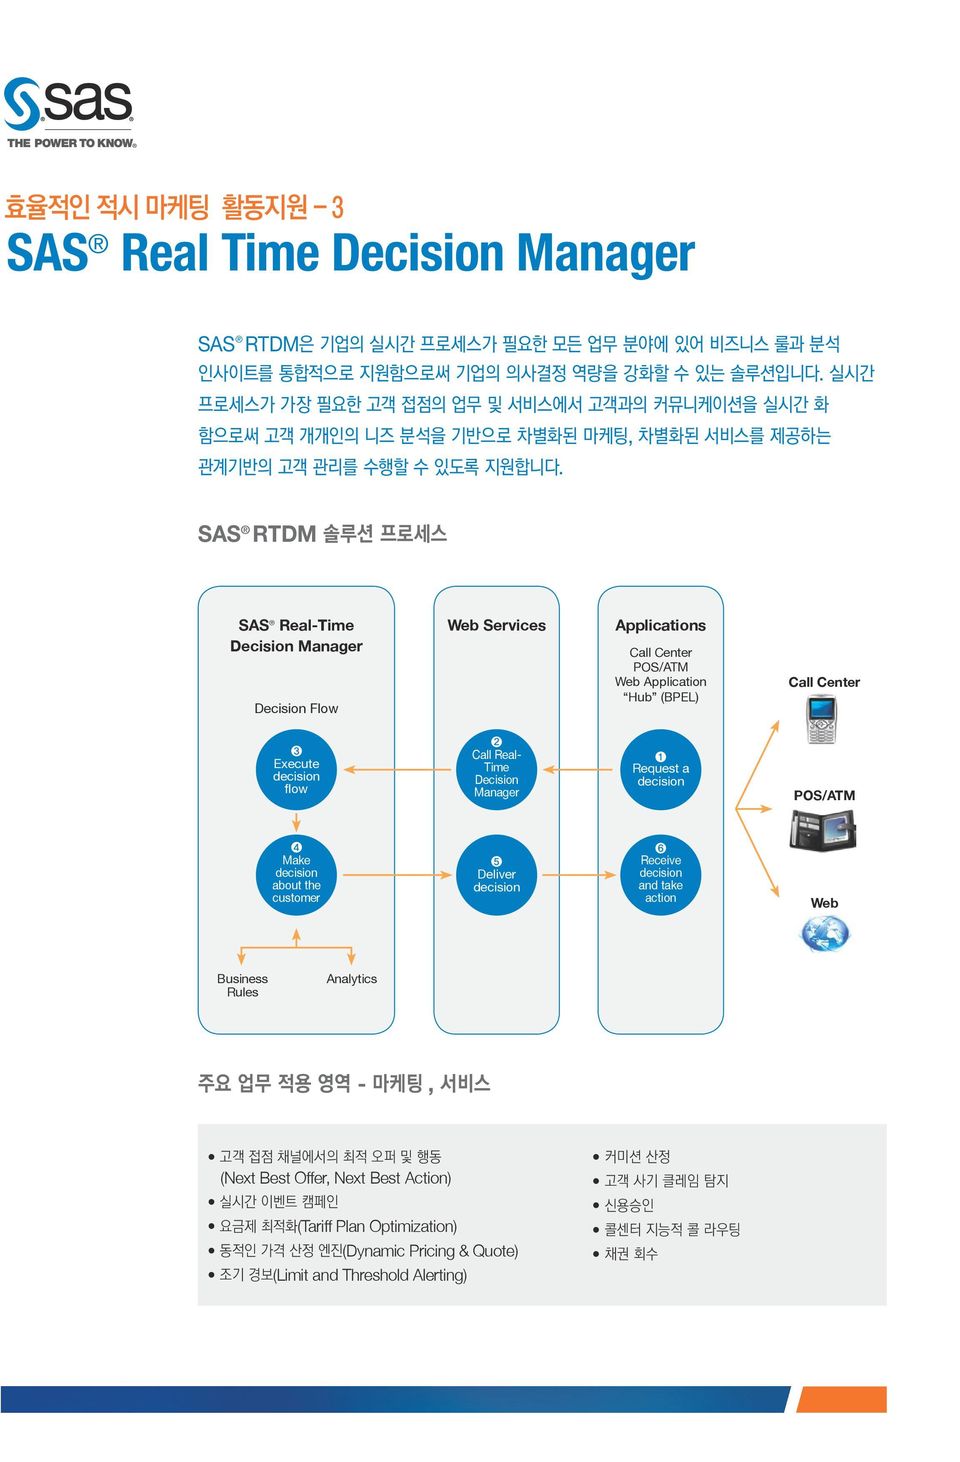 SAS RTDM SAS Real-Time Decision Manager Decision Flow Web Services Applications Call Center POS/ATM Web Application Hub (BPEL) Call Center ❸ Execute decision flow ❷ Call Real- Time